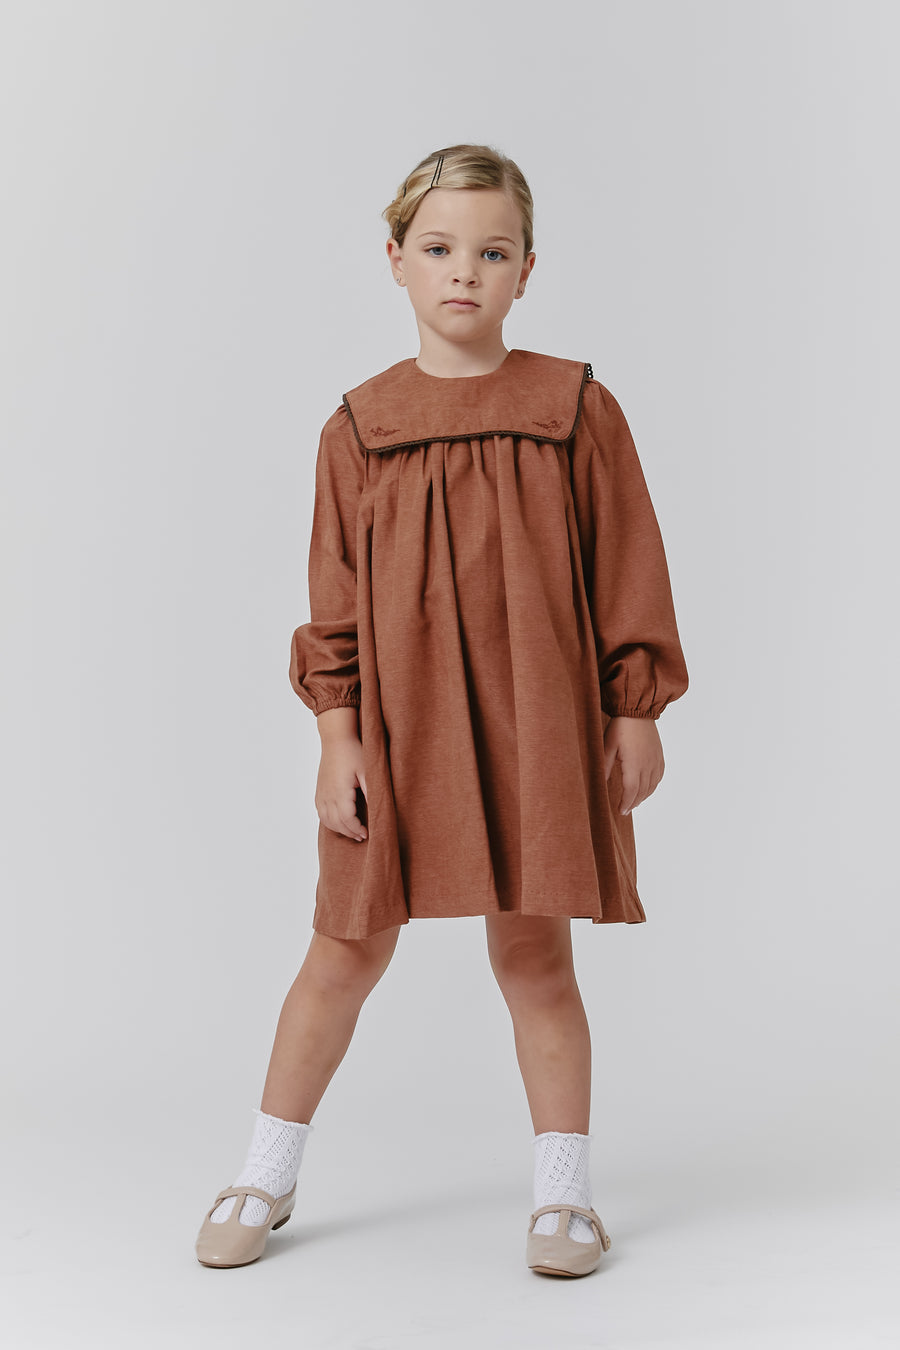 Brown bib dress by Kipp